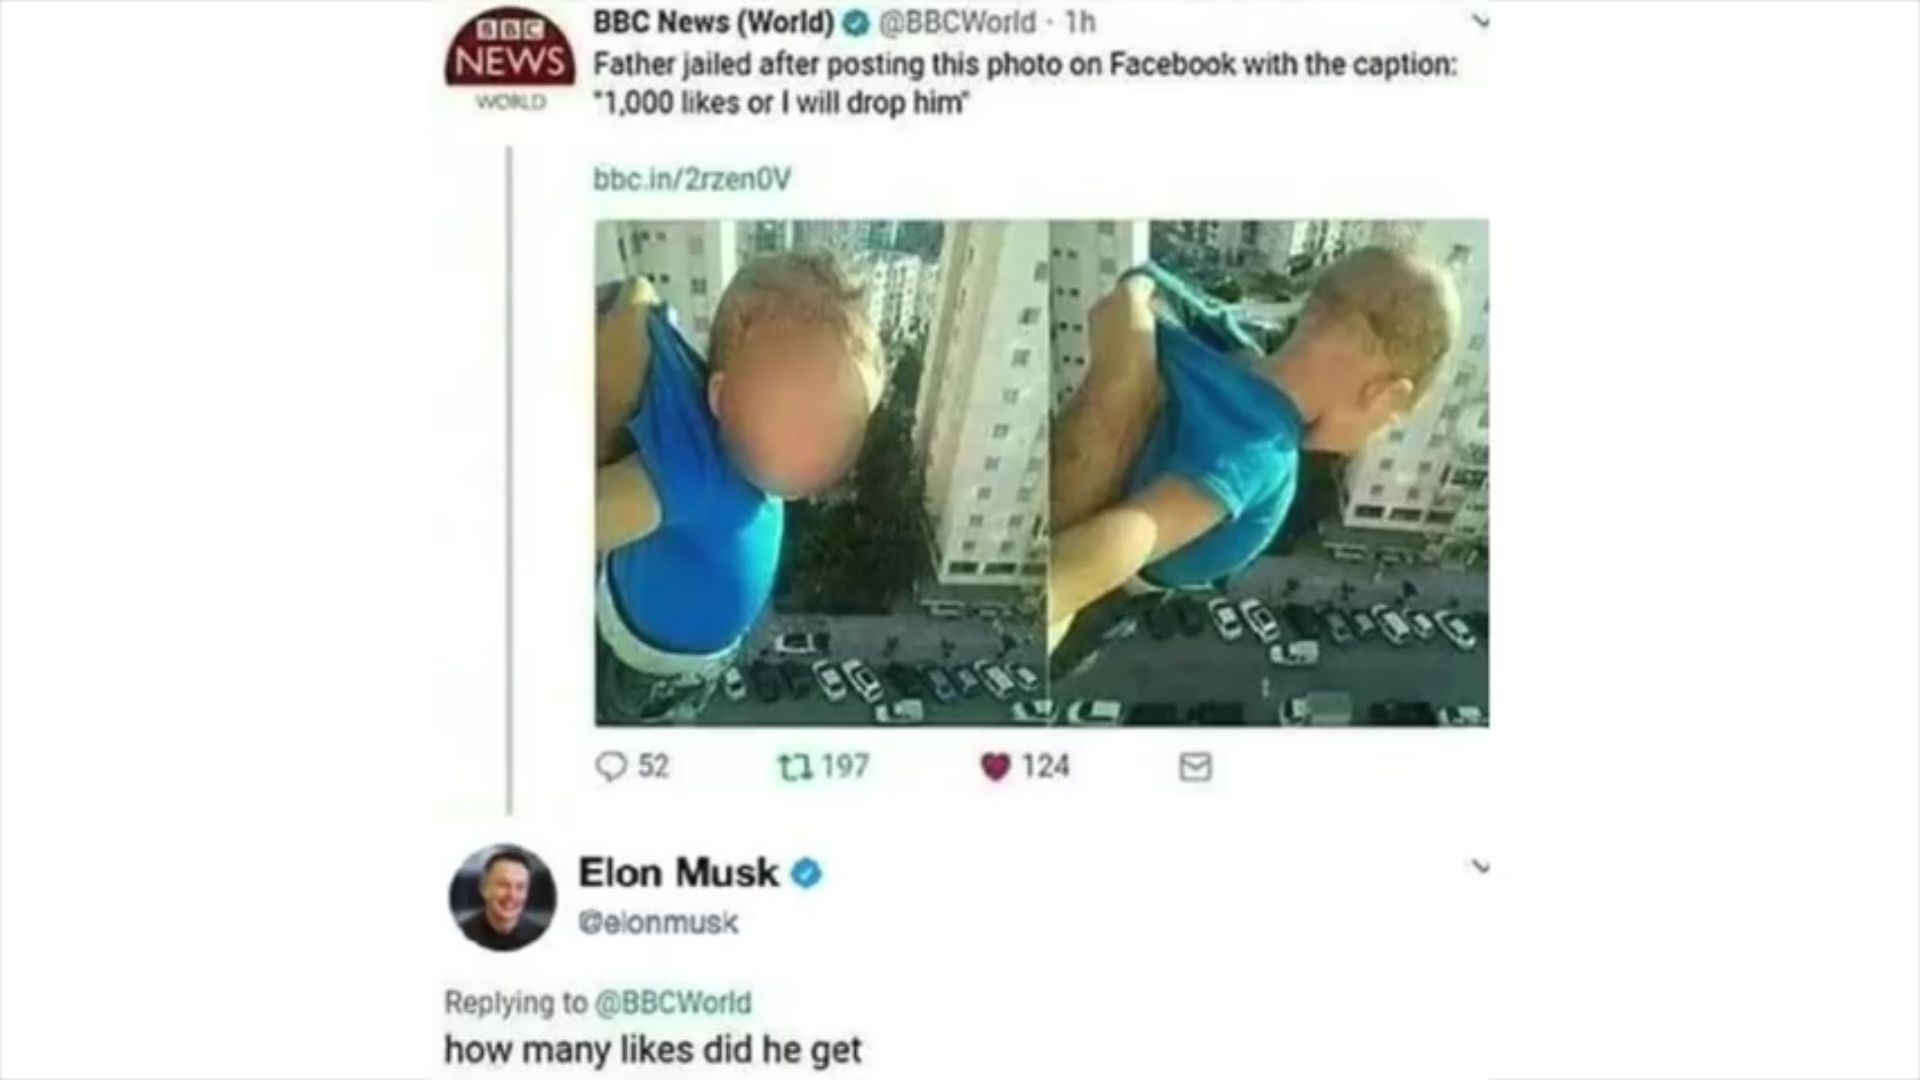 Elon r u okay?